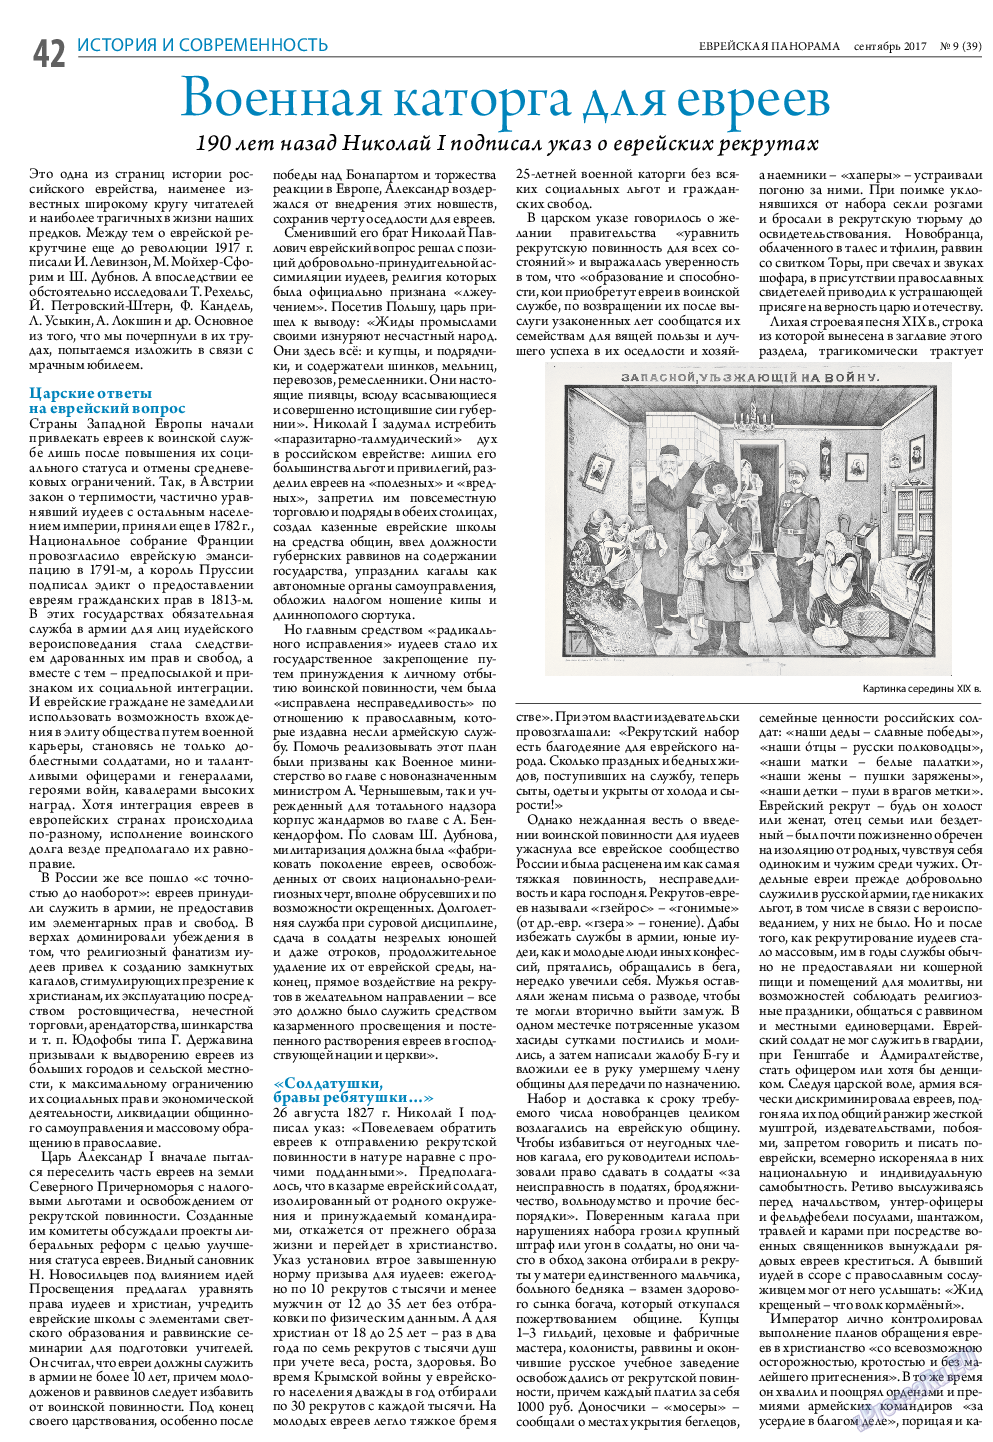 Еврейская панорама, газета. 2017 №9 стр.42